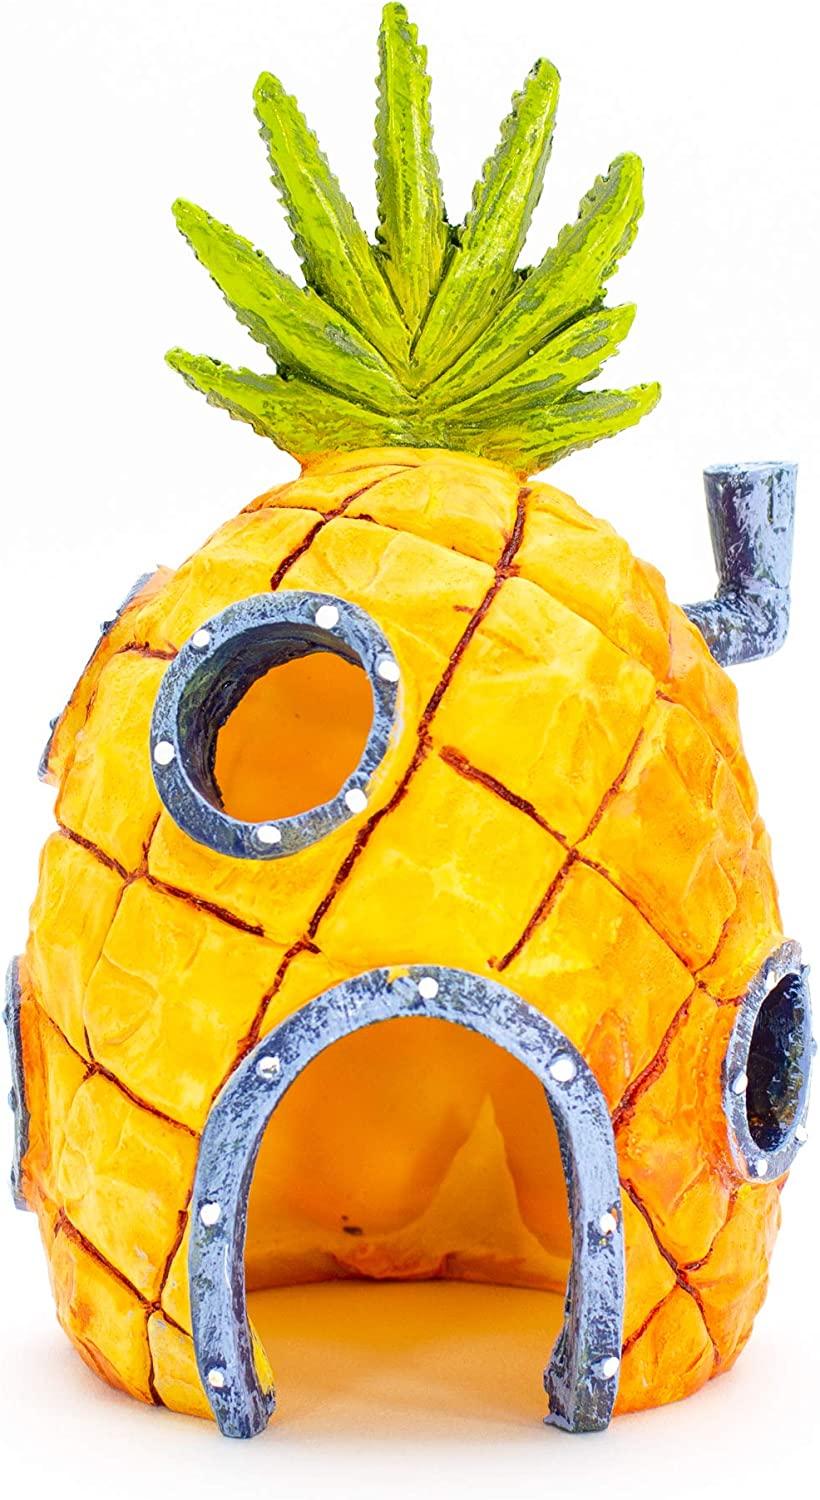 spongebob pineapple